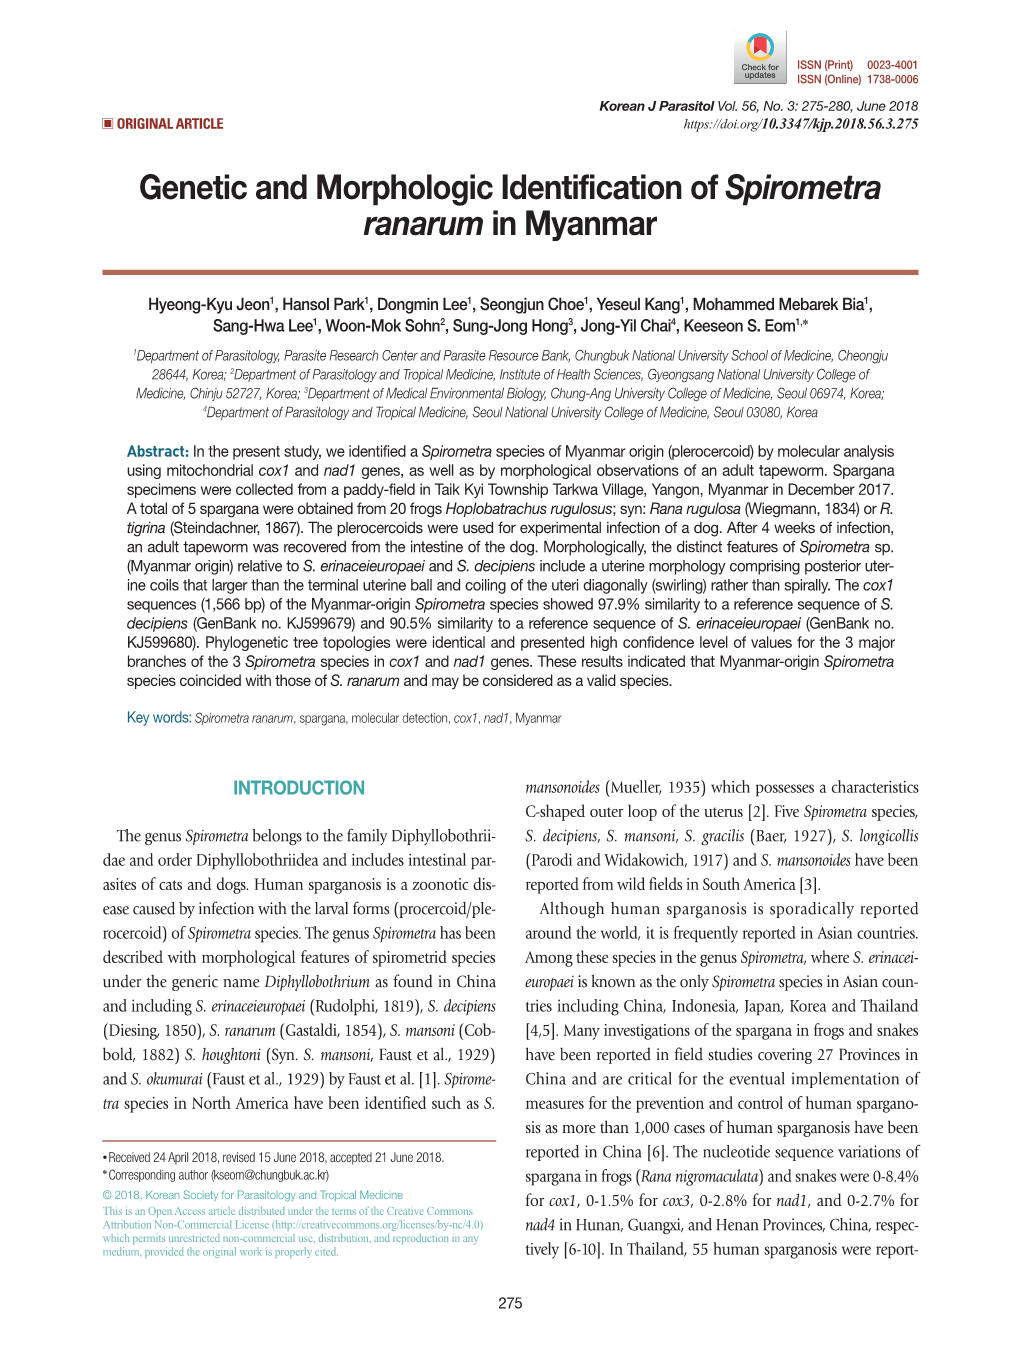 Genetic and Morphologic Identification of Spirometra Ranarum in Myanmar